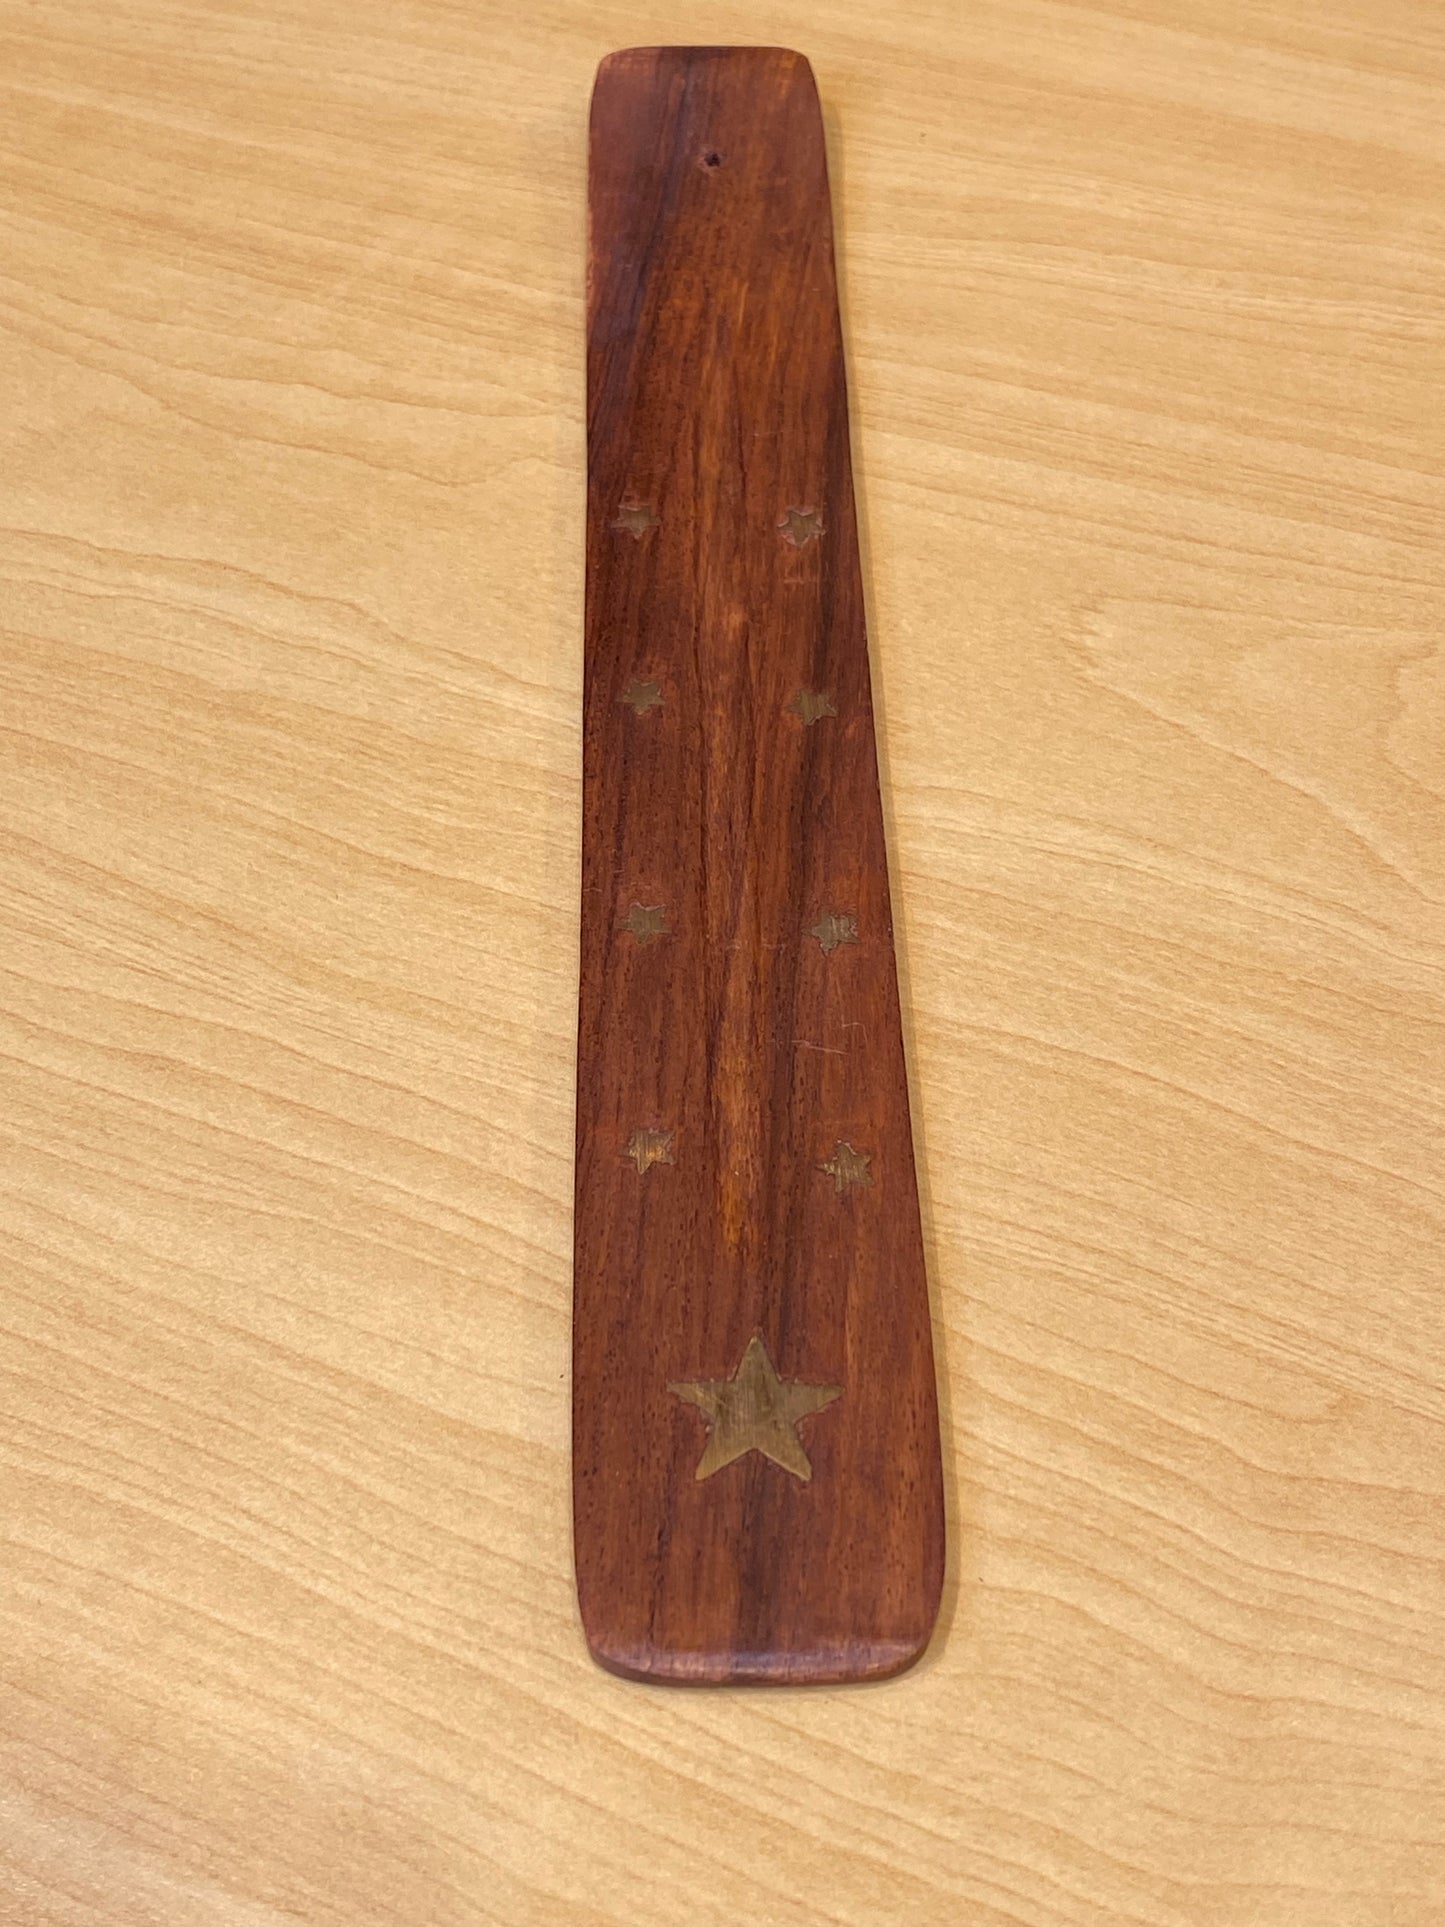 Wooden Ash Catcher Incense Holder Brass Inlay Star with Stars